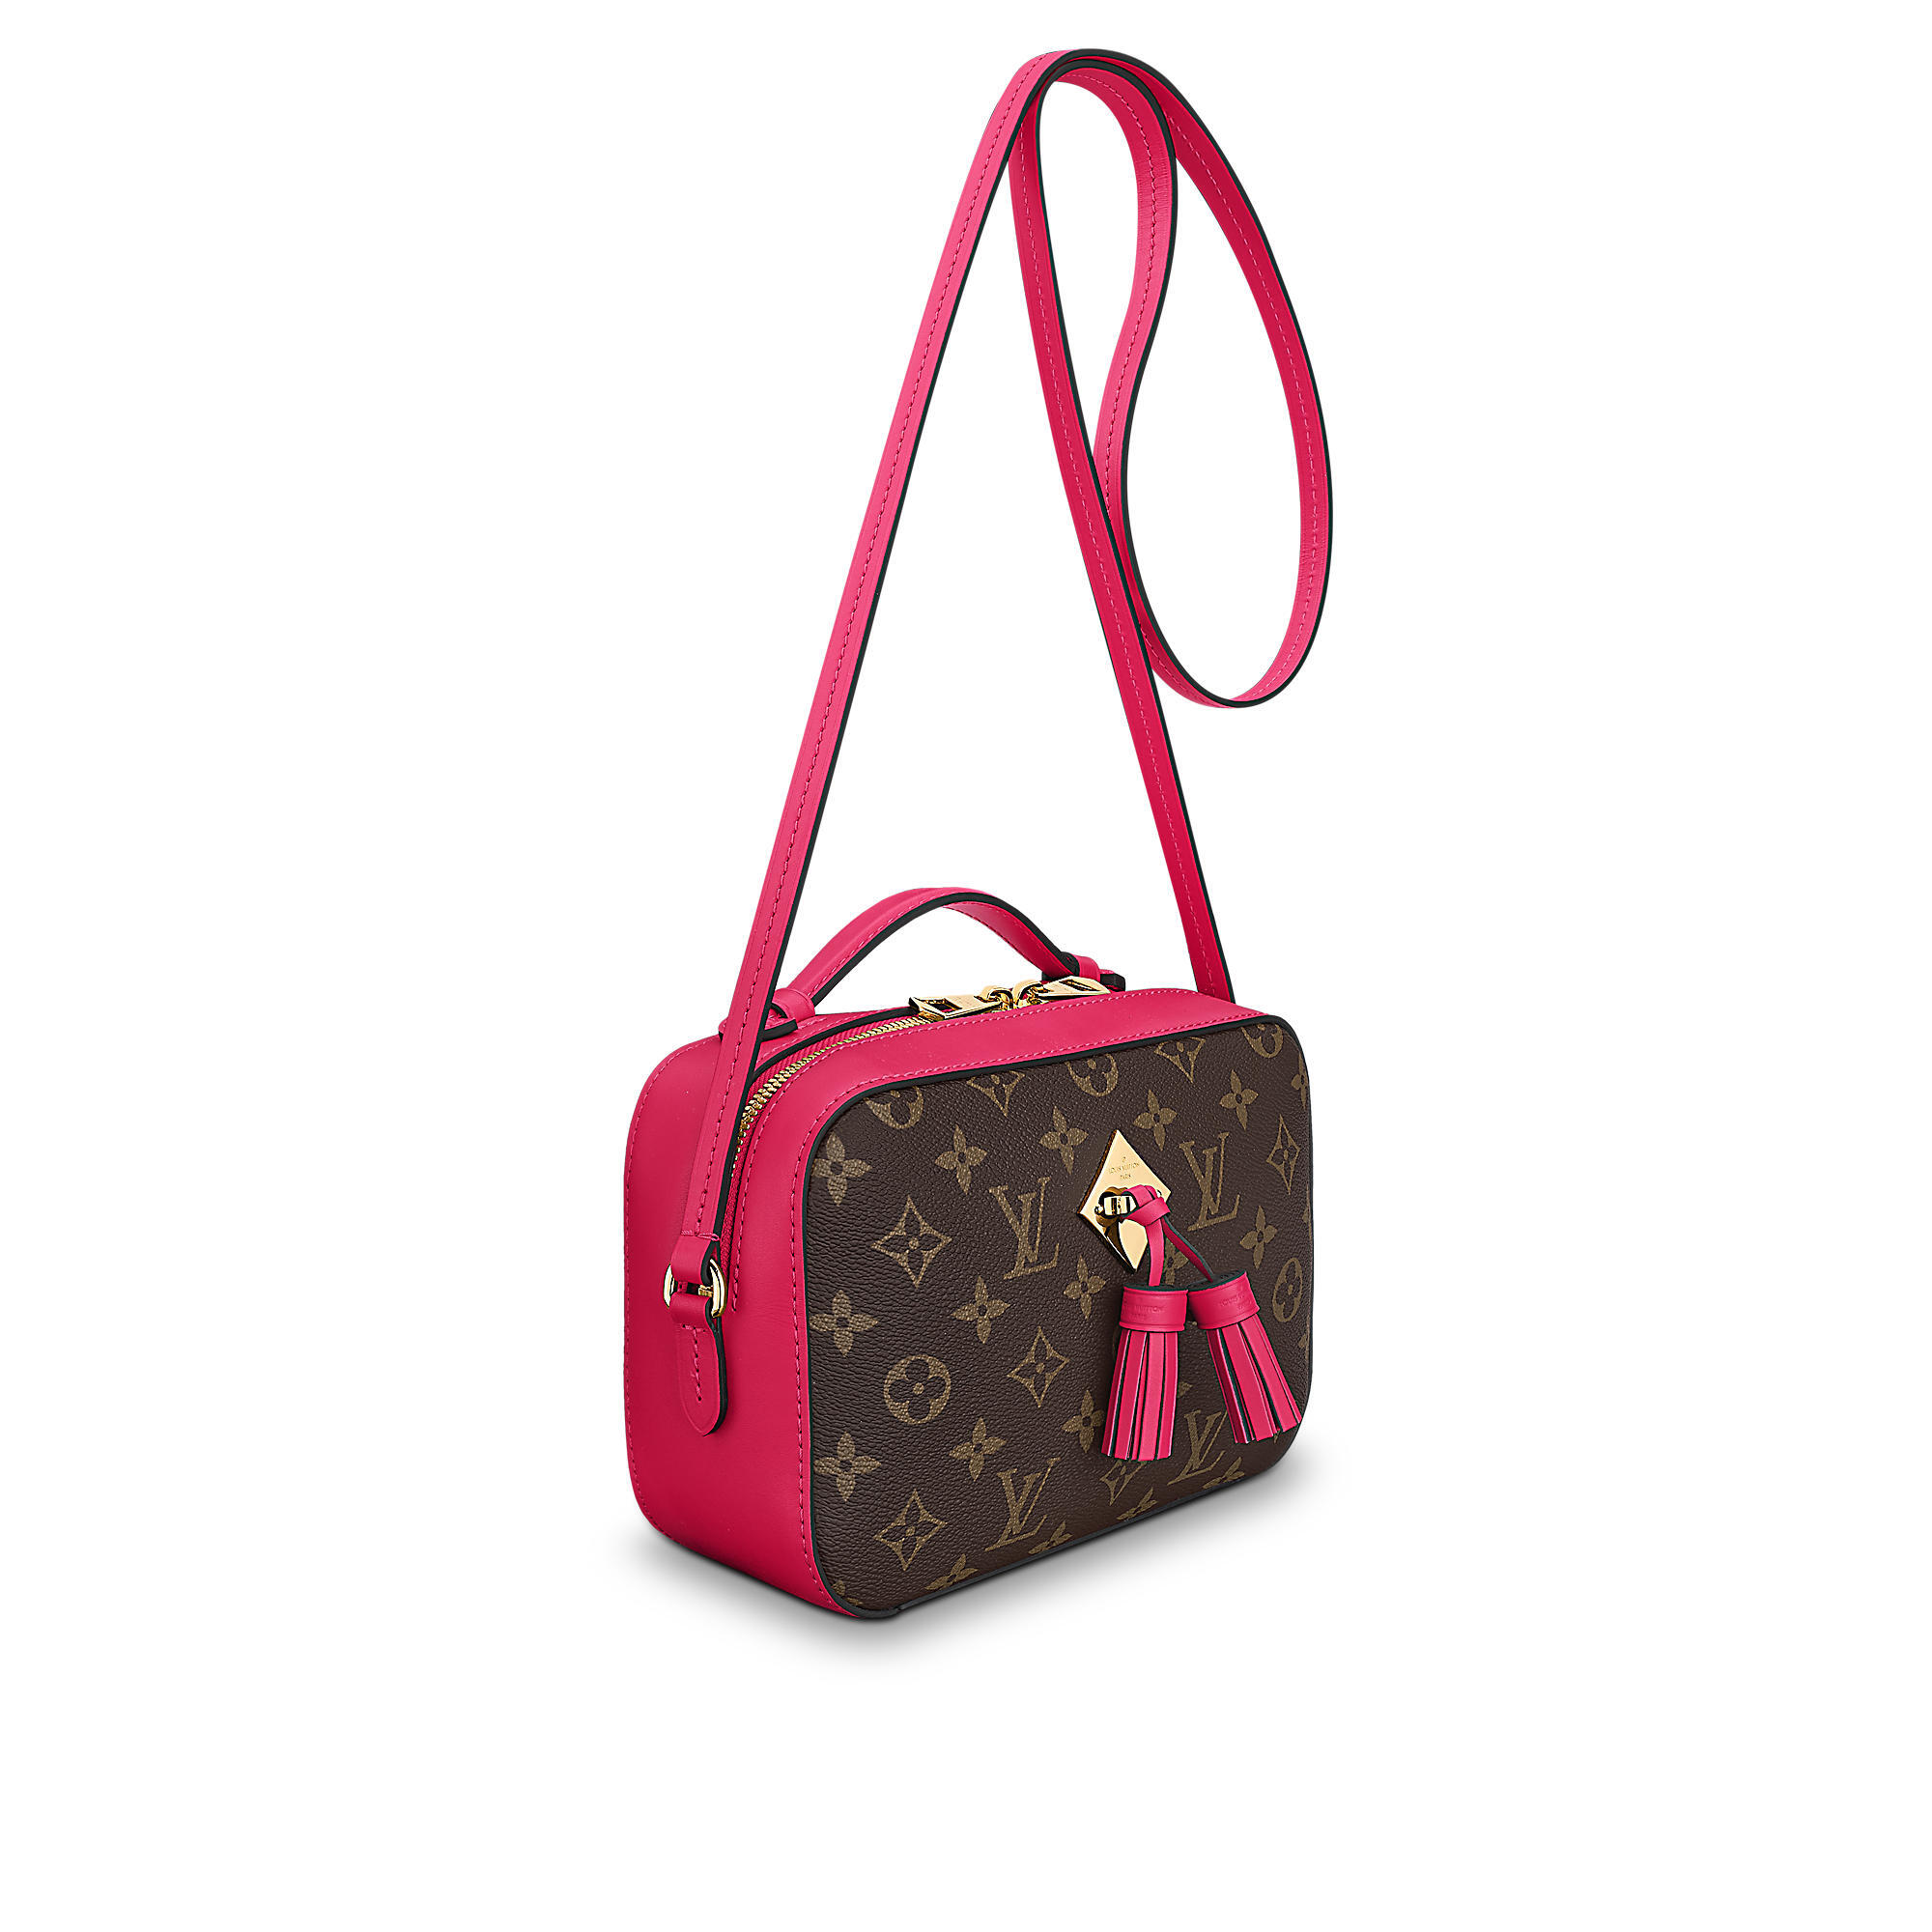 LV Monogram louis vuitton crossbody bag women louis vuitton handbags on sale lv shoulder bag ...